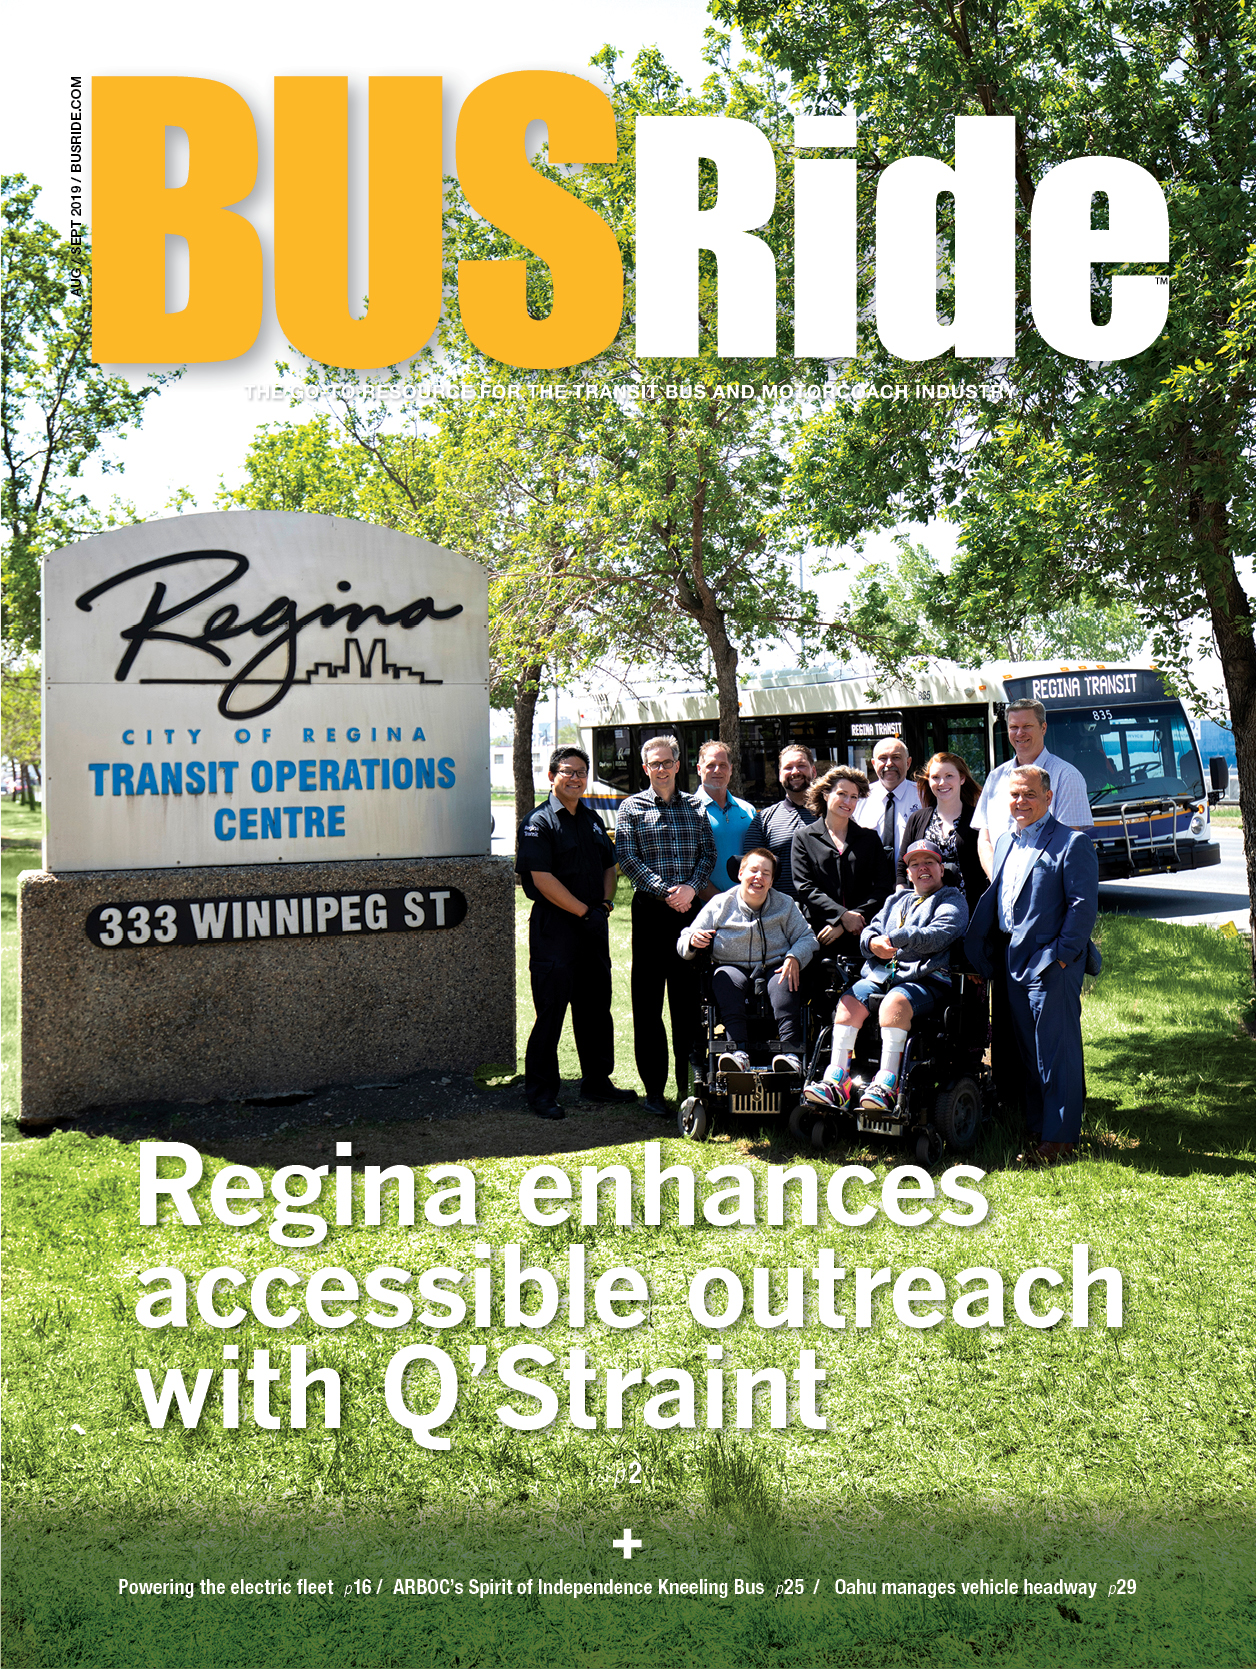 Regina enhances accessible transit with Q'Straint